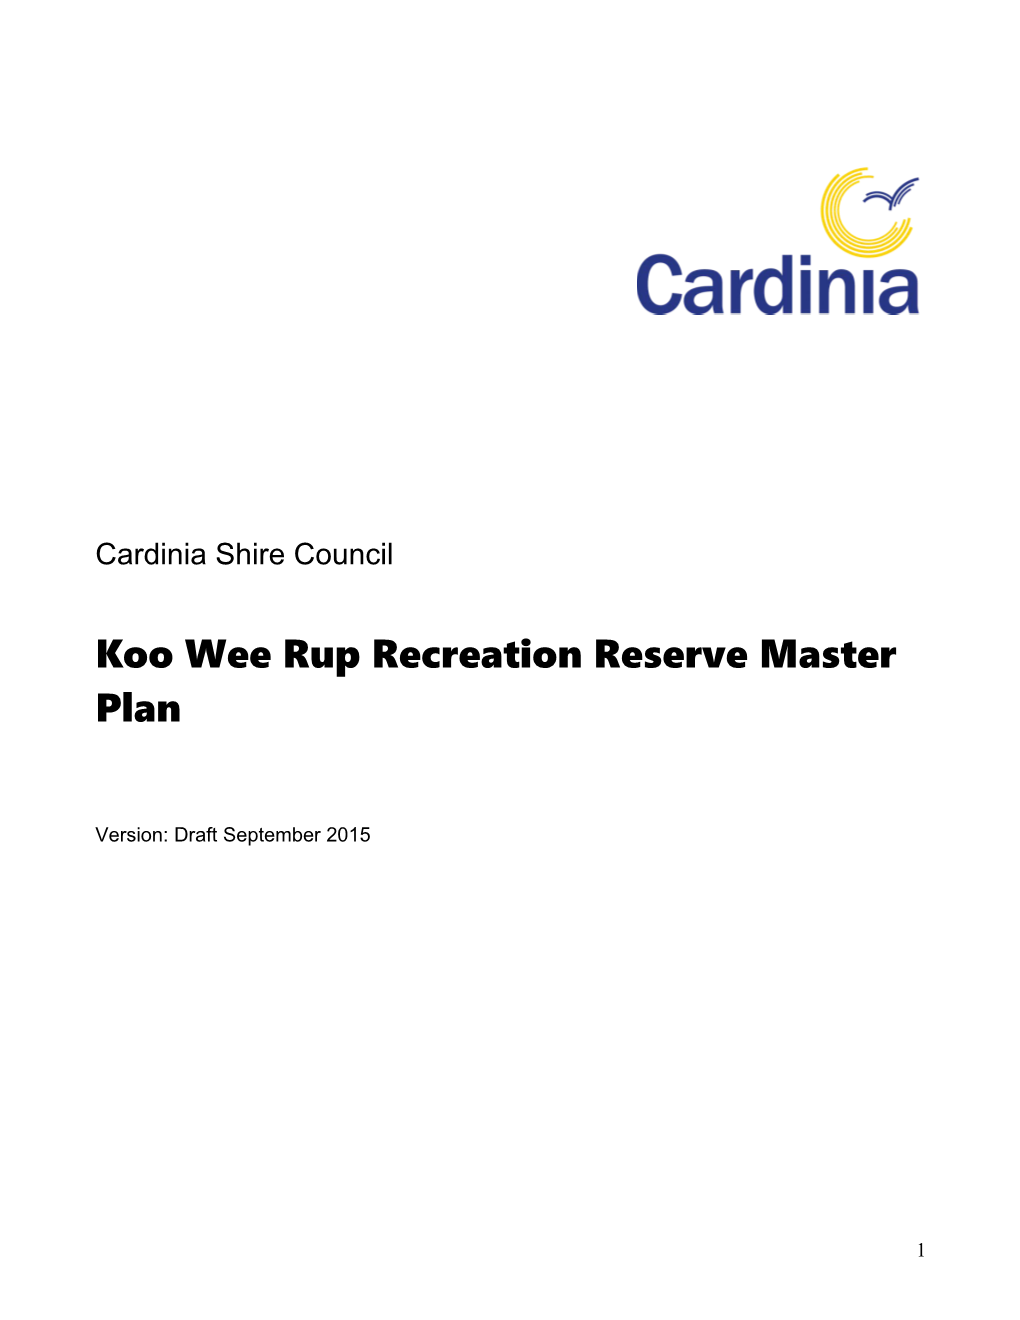 Koo Wee Ruprecreation Reserve Master Plan